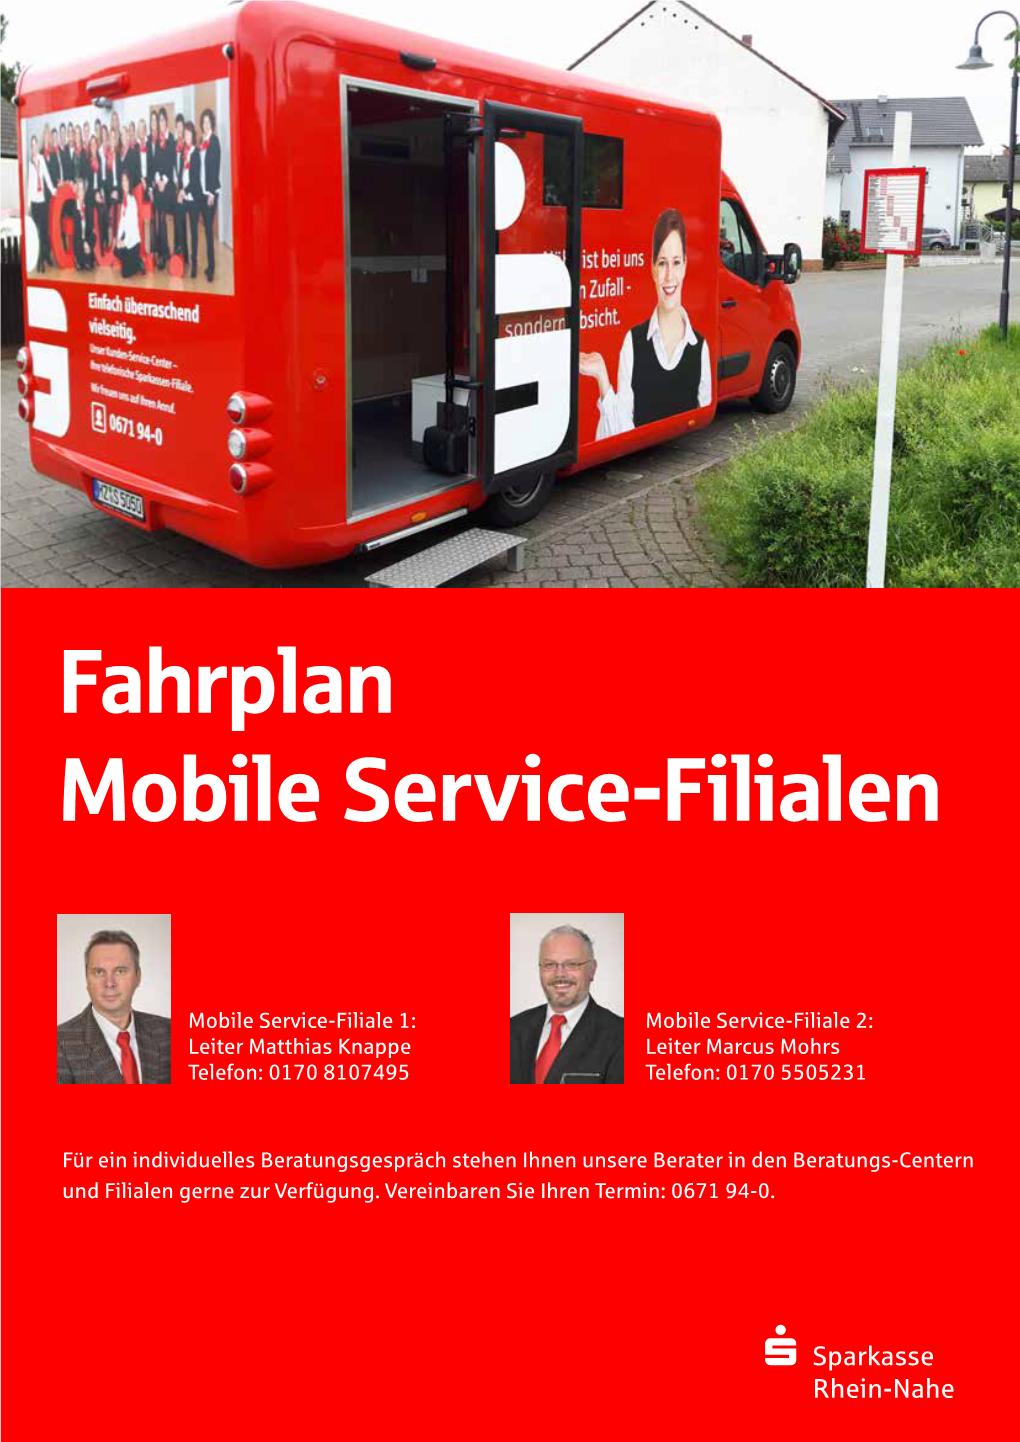 Fahrplan Mobile Service-Filialen